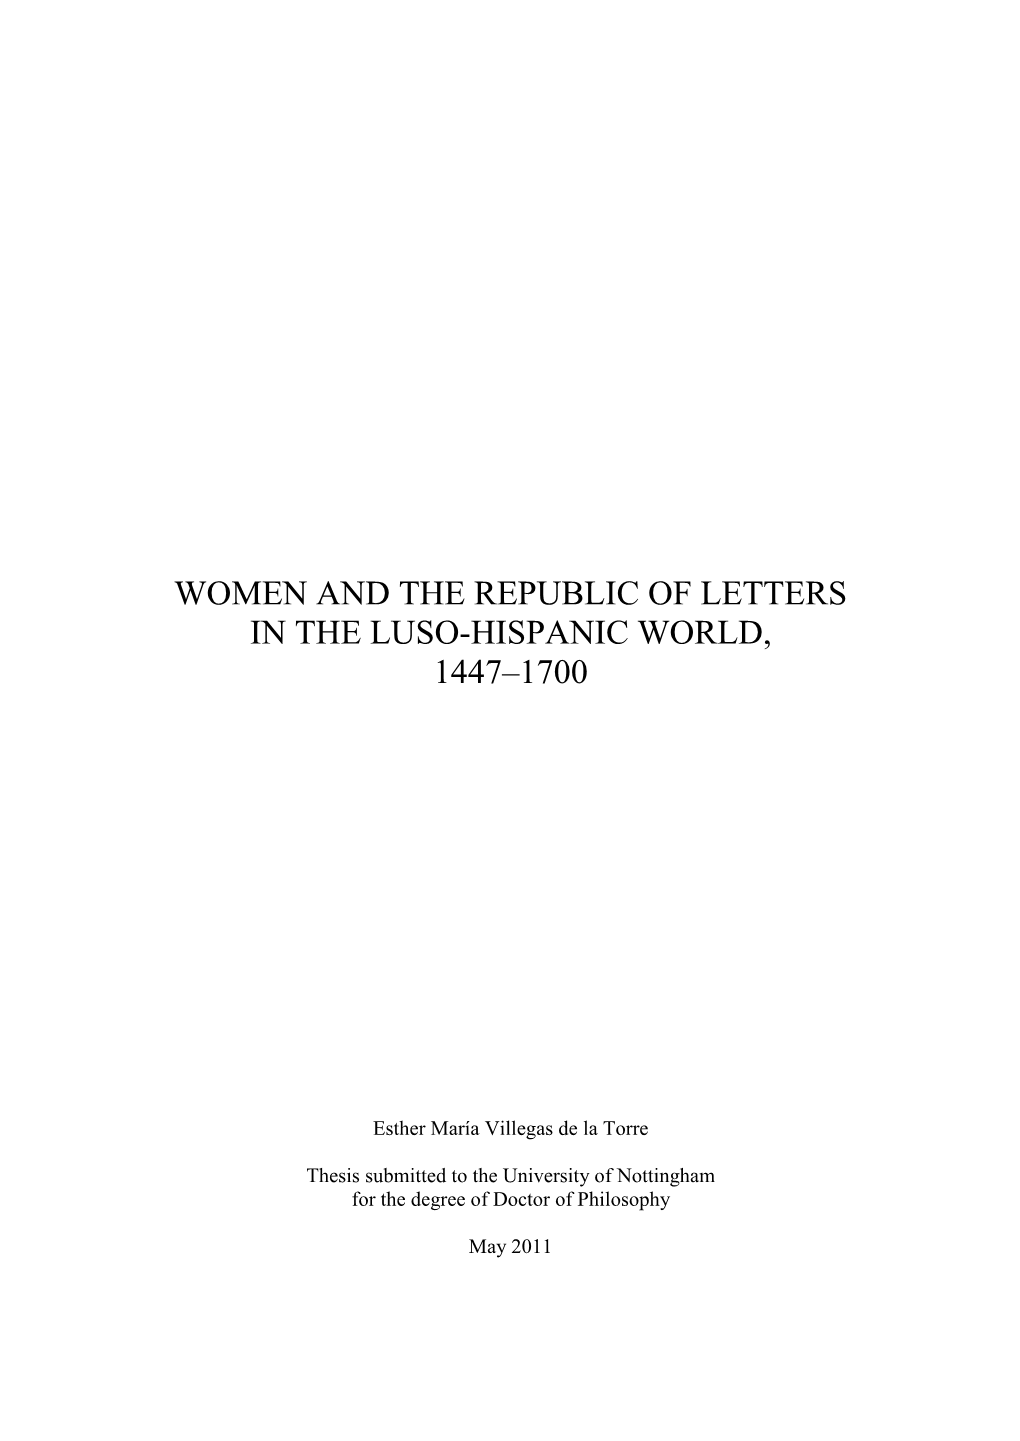 Villegas De La Torre, Esther Maria (2012) Women and the Republic Of